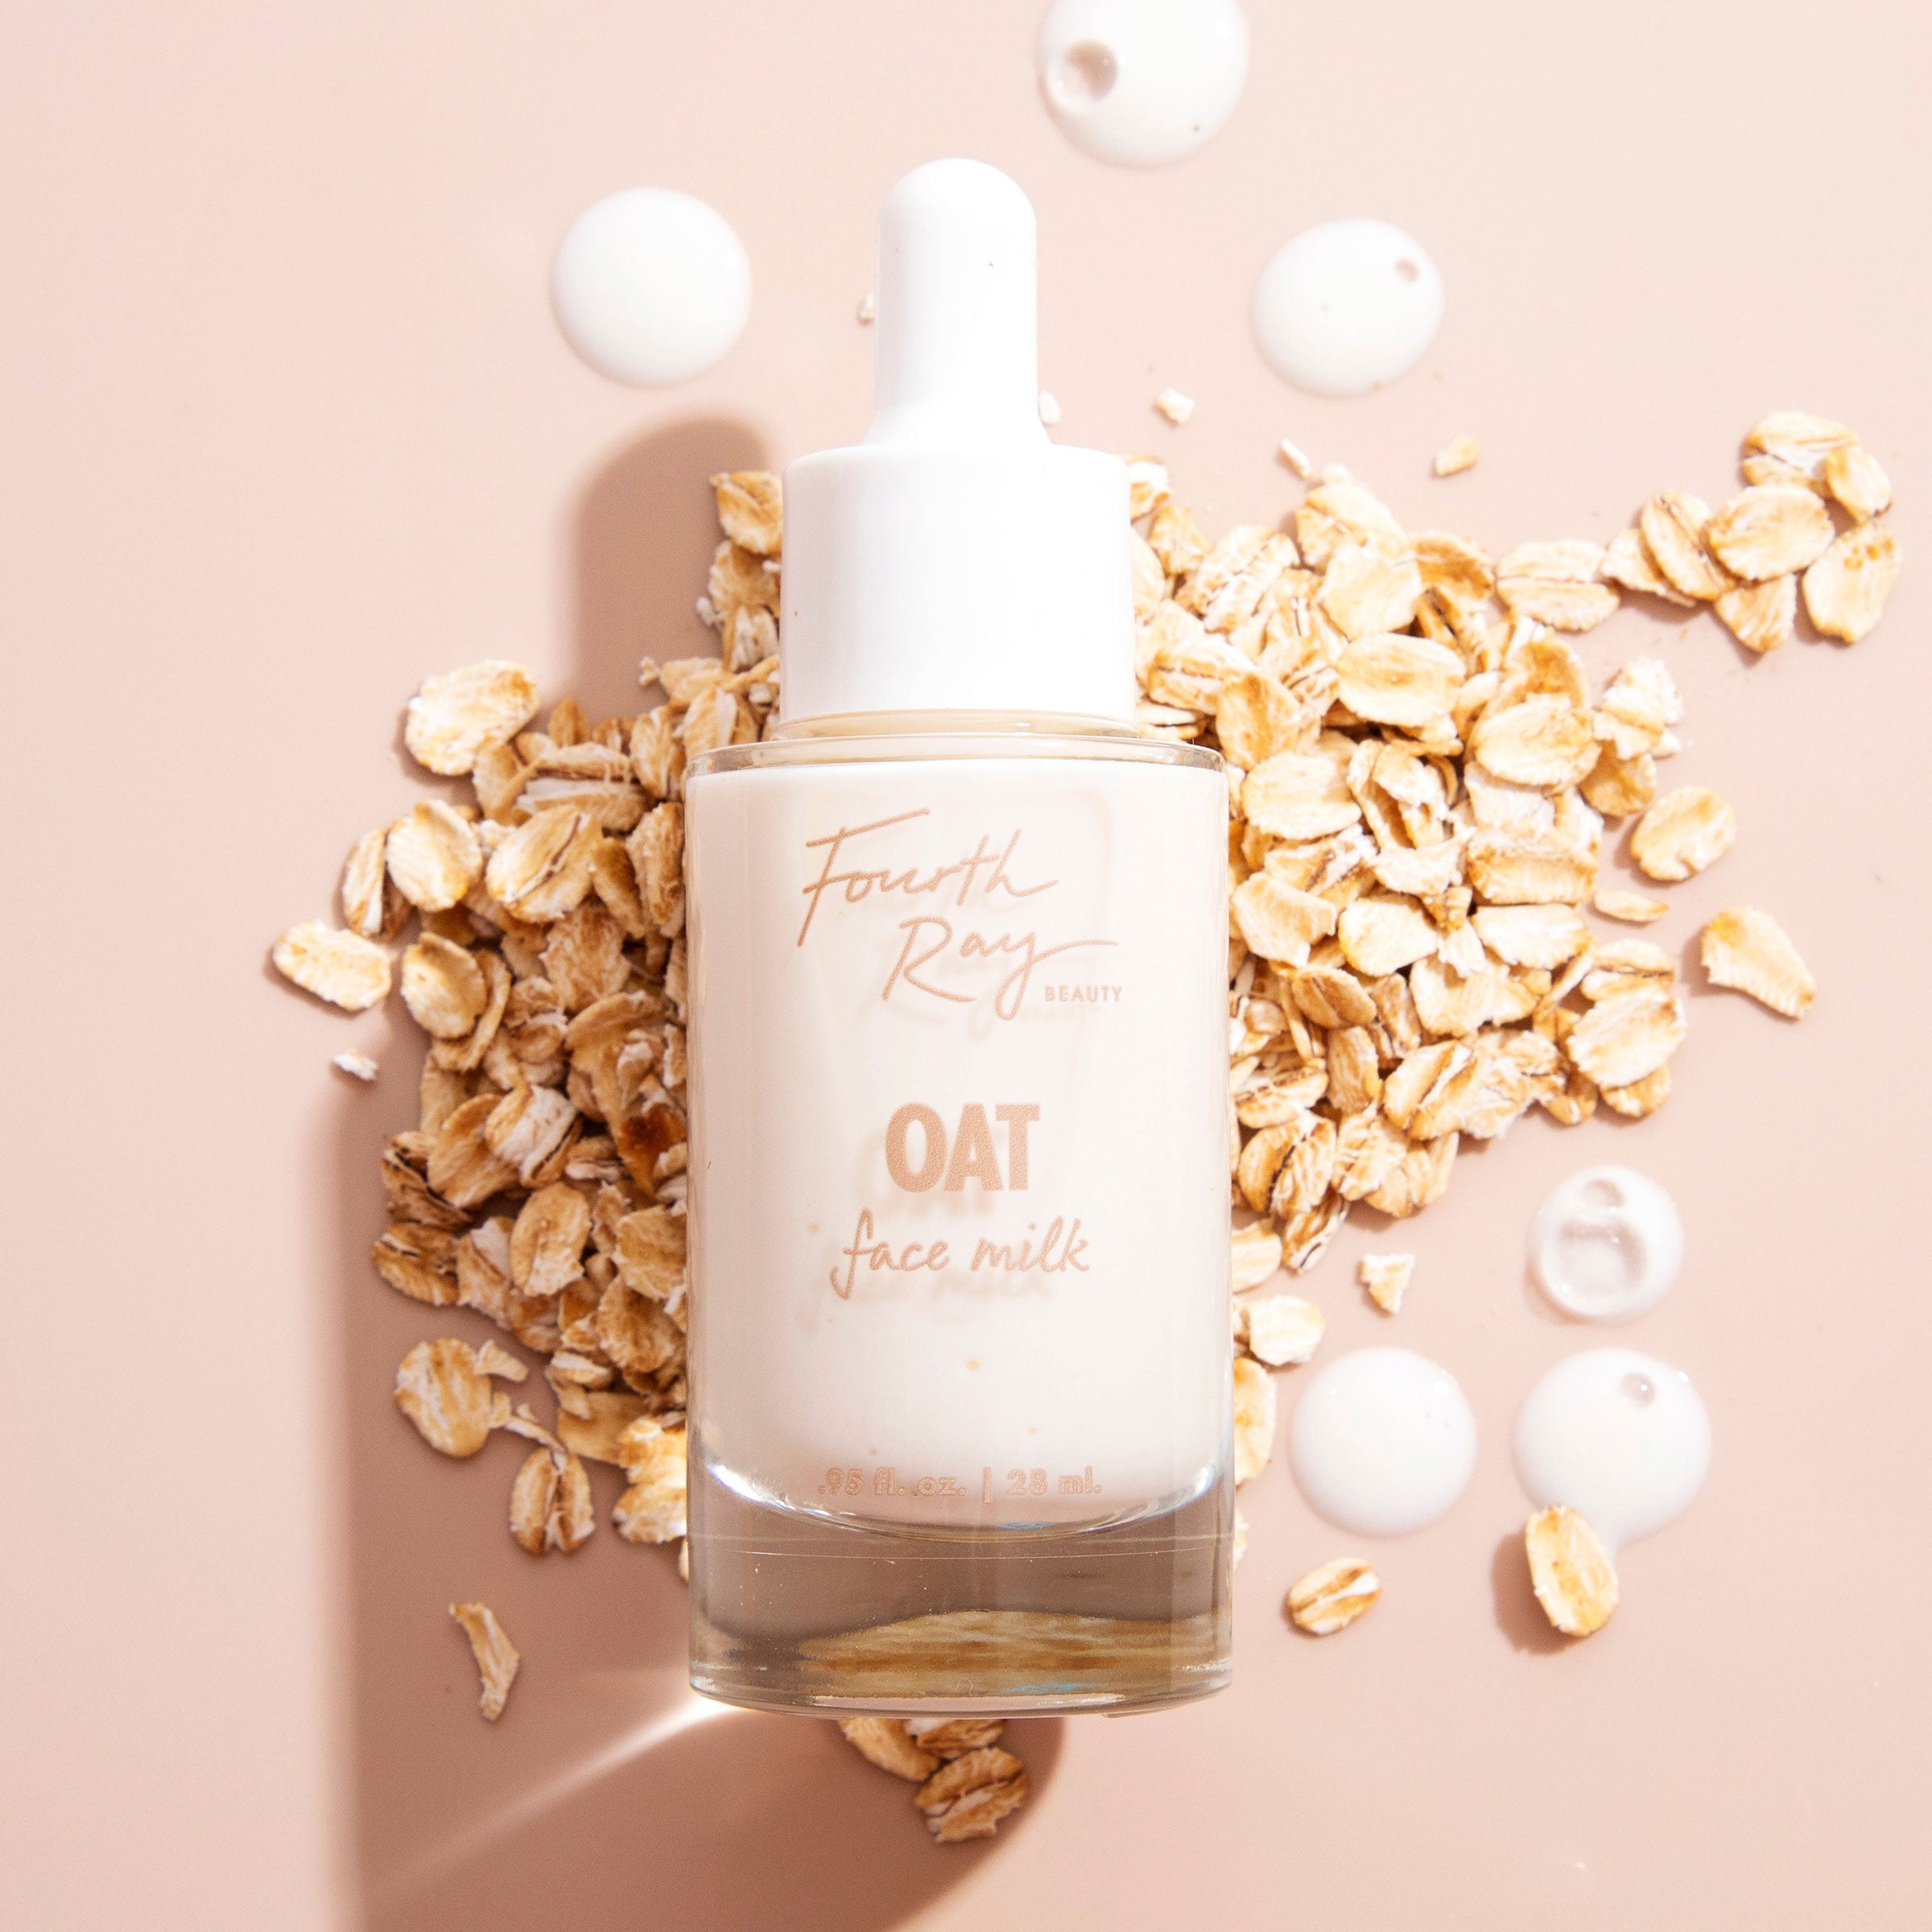 Fourth Ray Beauty Oat Face Milk moisturizer